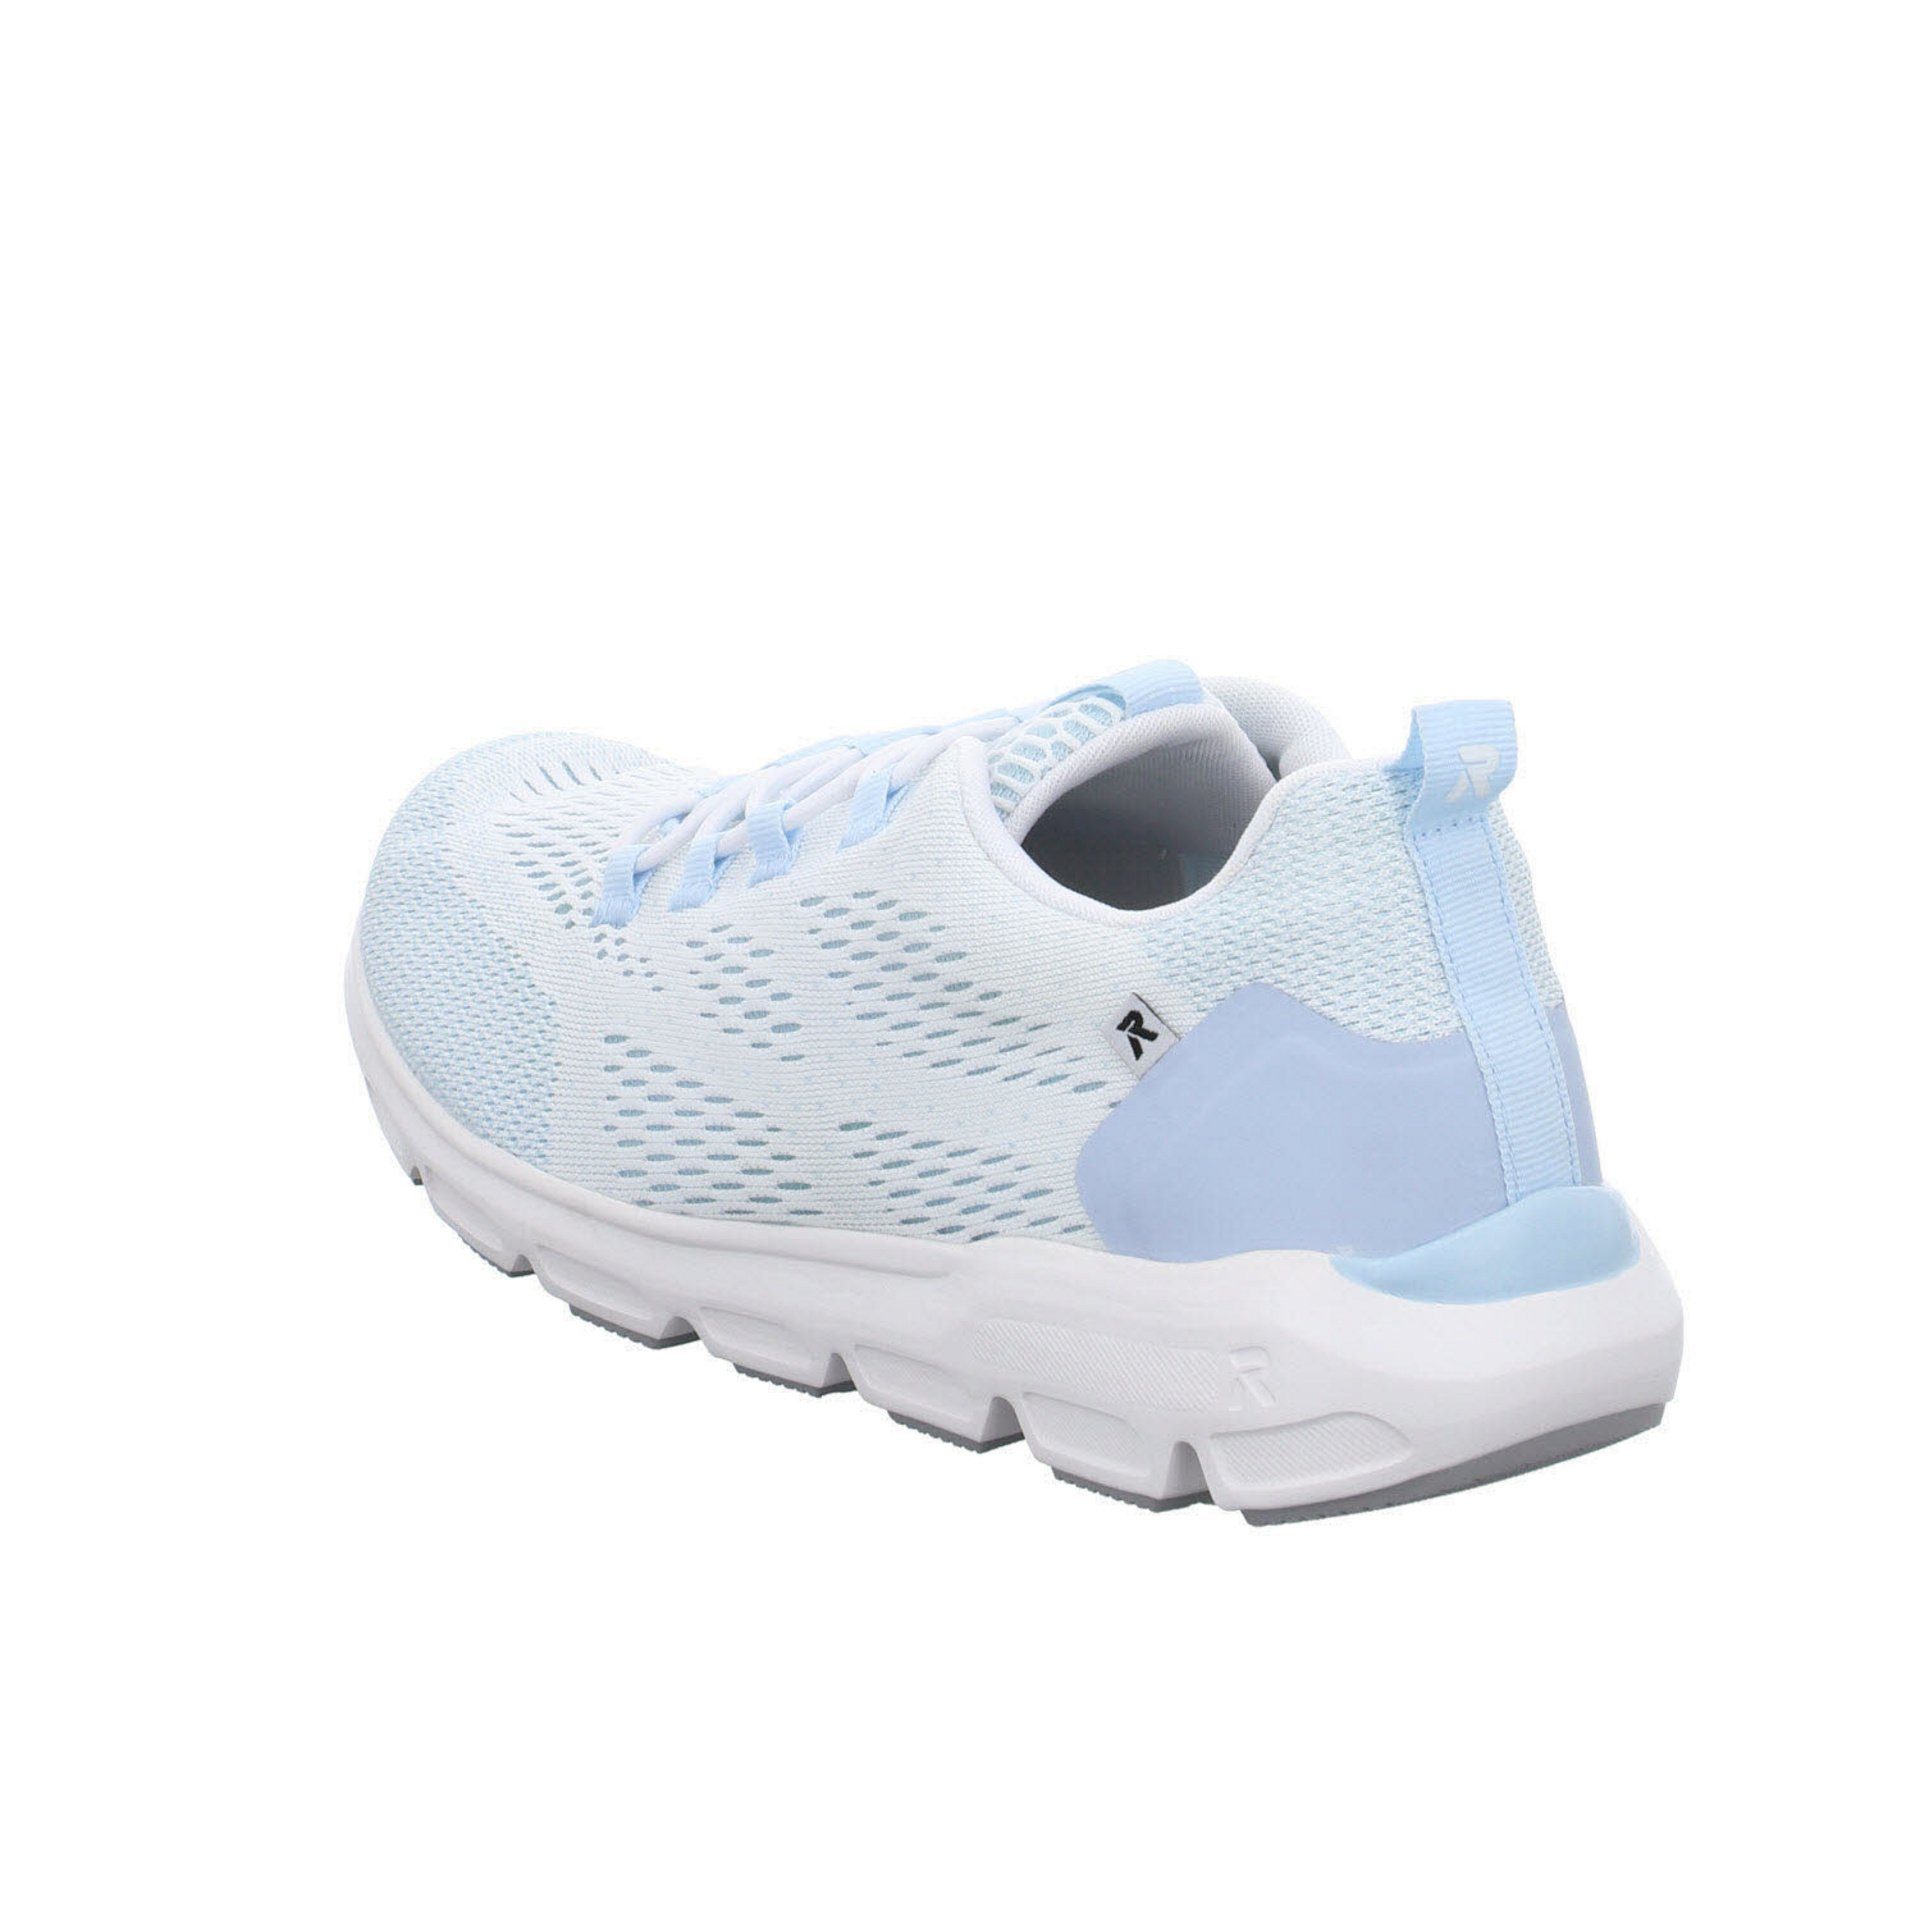 R-Evolution sportweiss-ciel/ciel Sneaker Rieker Schuhe Textil Slipper Slip-On Sneaker Damen